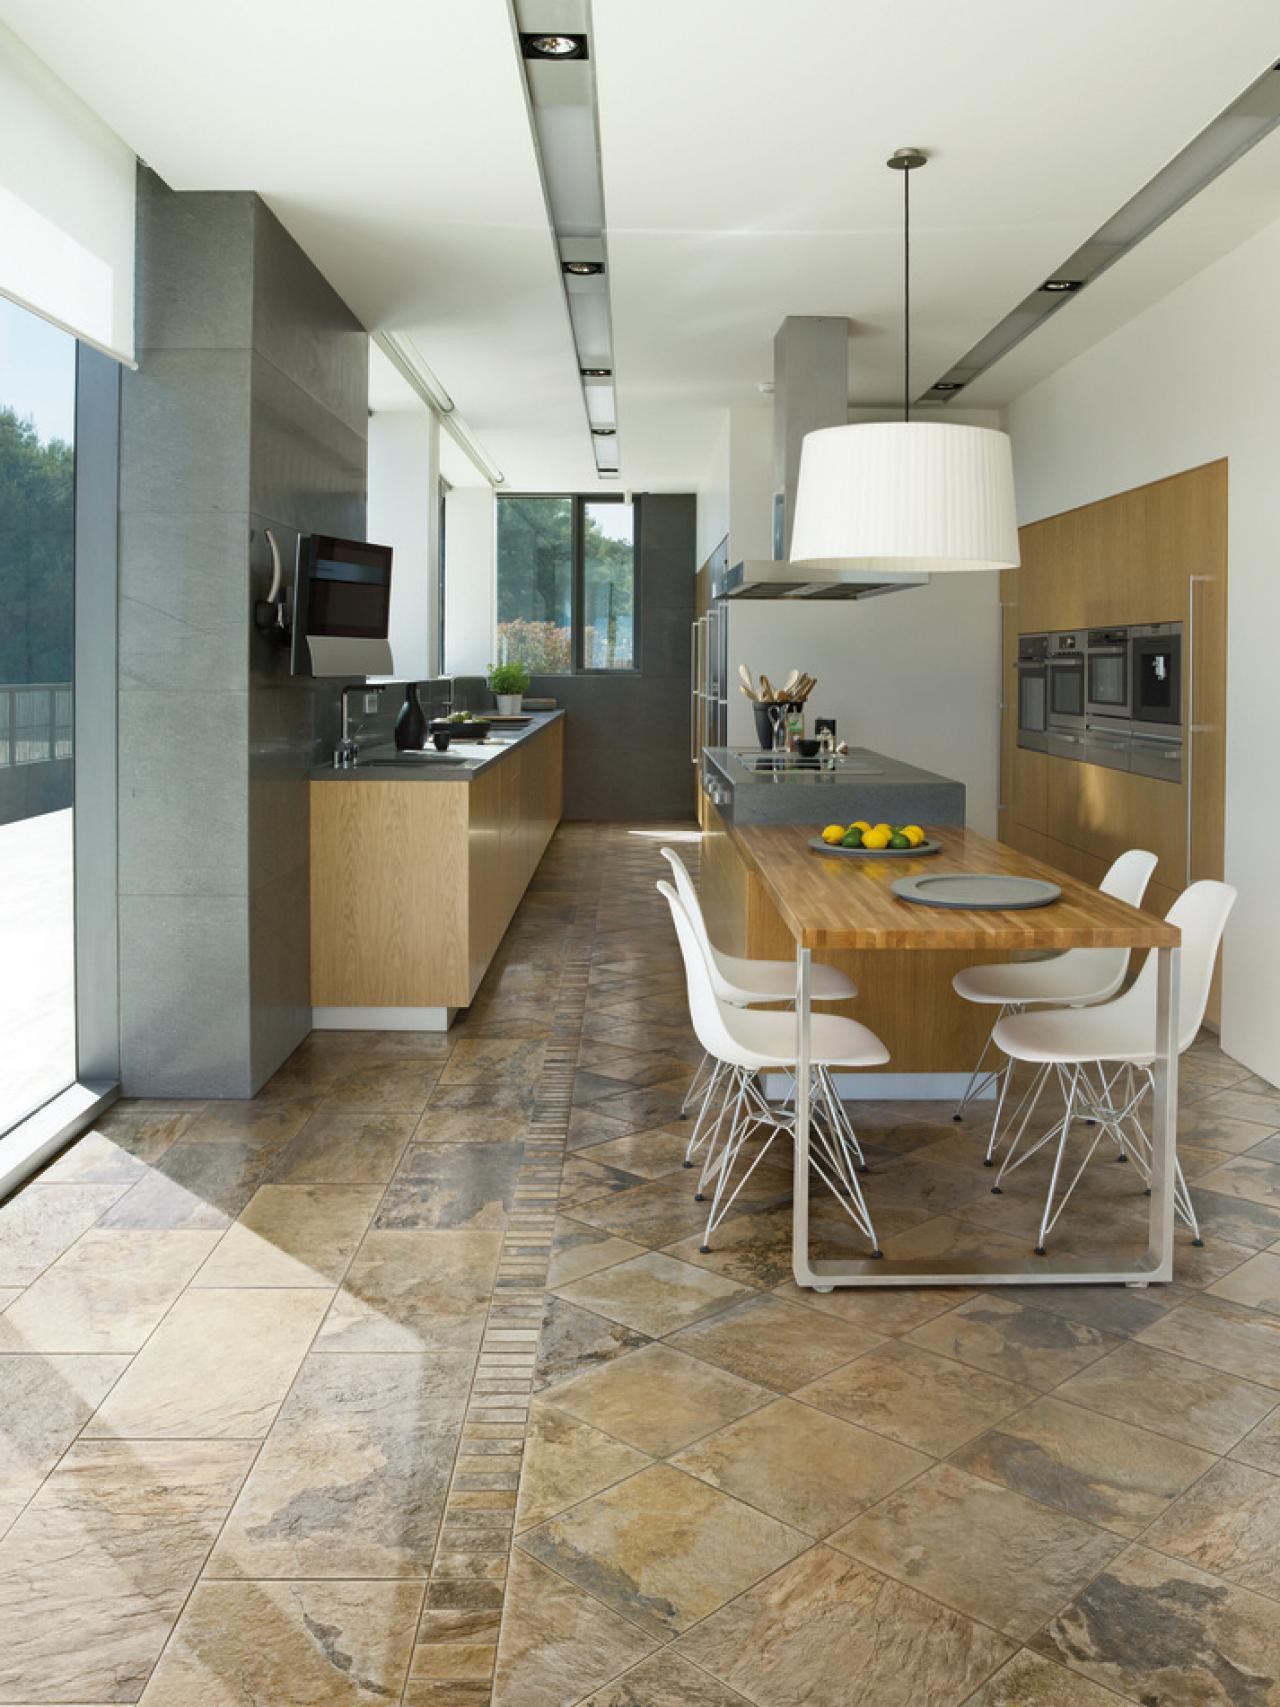 Kitchen Tile Floor Ideas
 20 Best Kitchen Tile Floor Ideas for Your Home